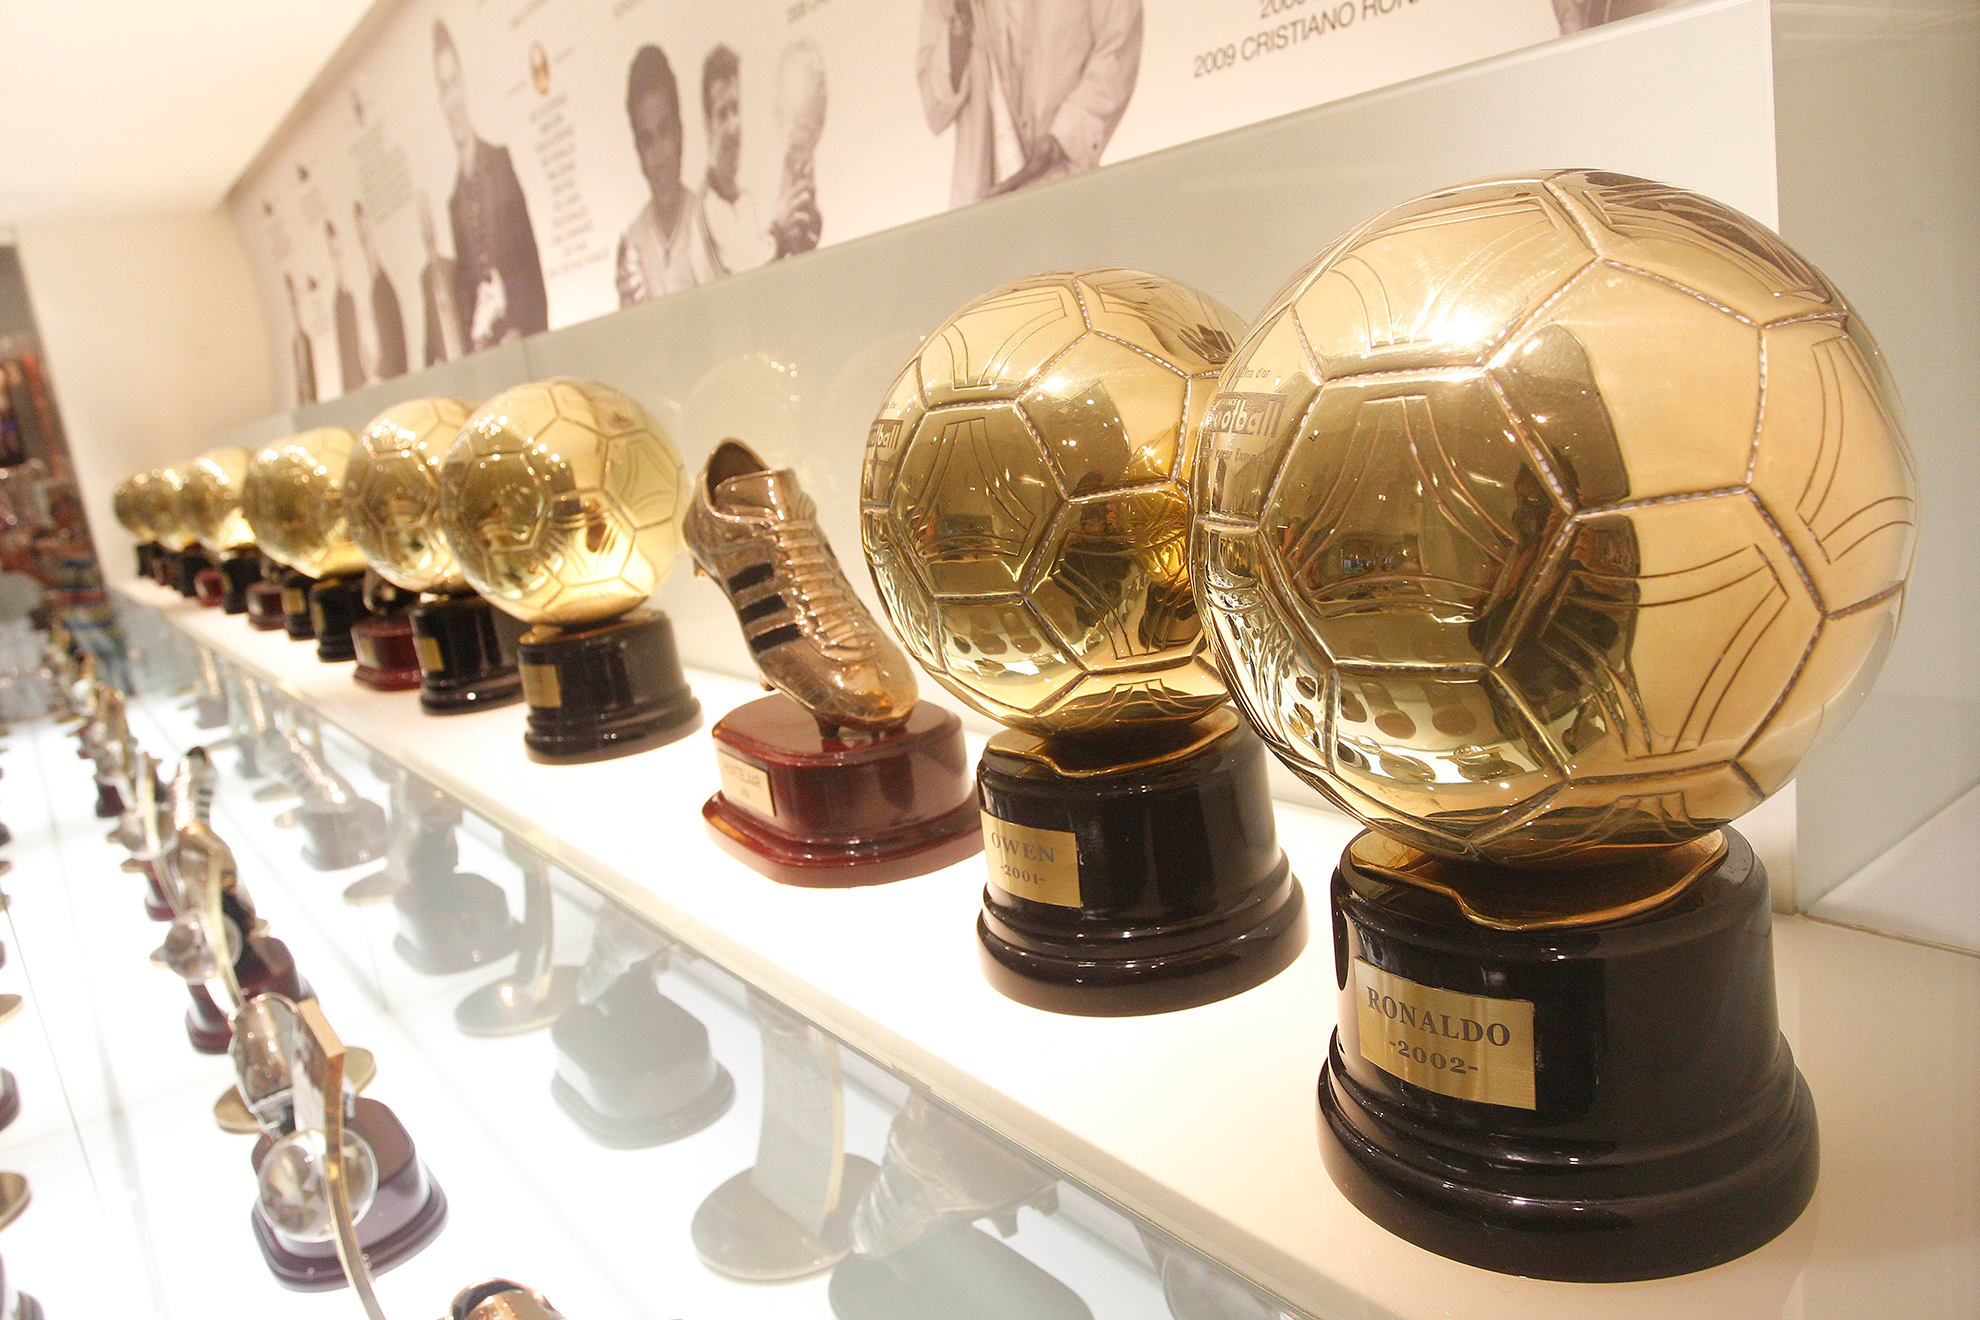 Madridistas ganadores Balón de Oro